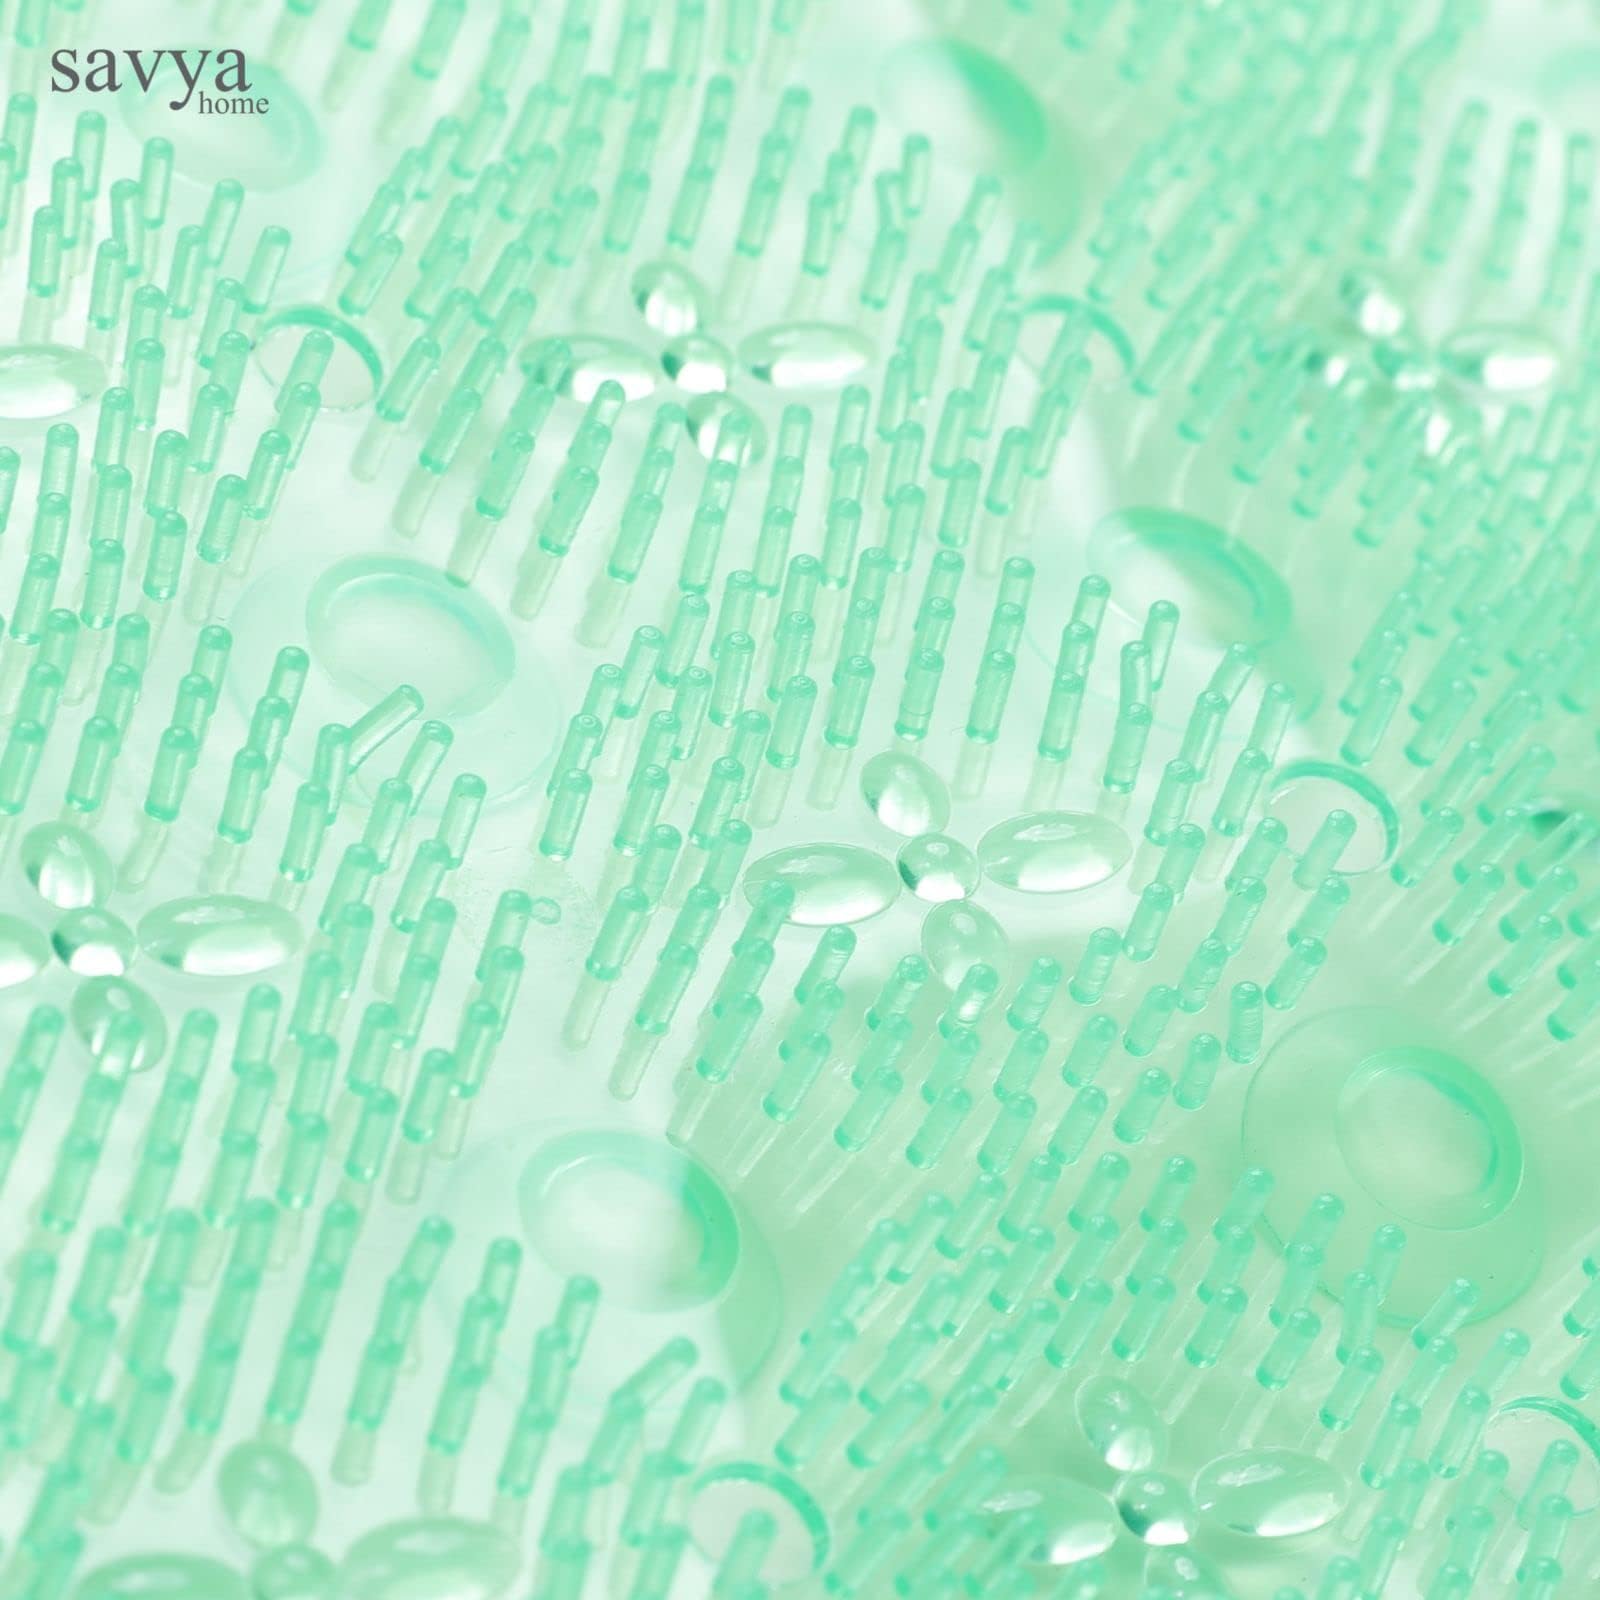 Savya Home Anti Skid Bath Mat for Bathroom, PVC Bath Mat with Suction Cup, Machine Washable Floor Mat (67x37 cm)| Light Green & Light Blue